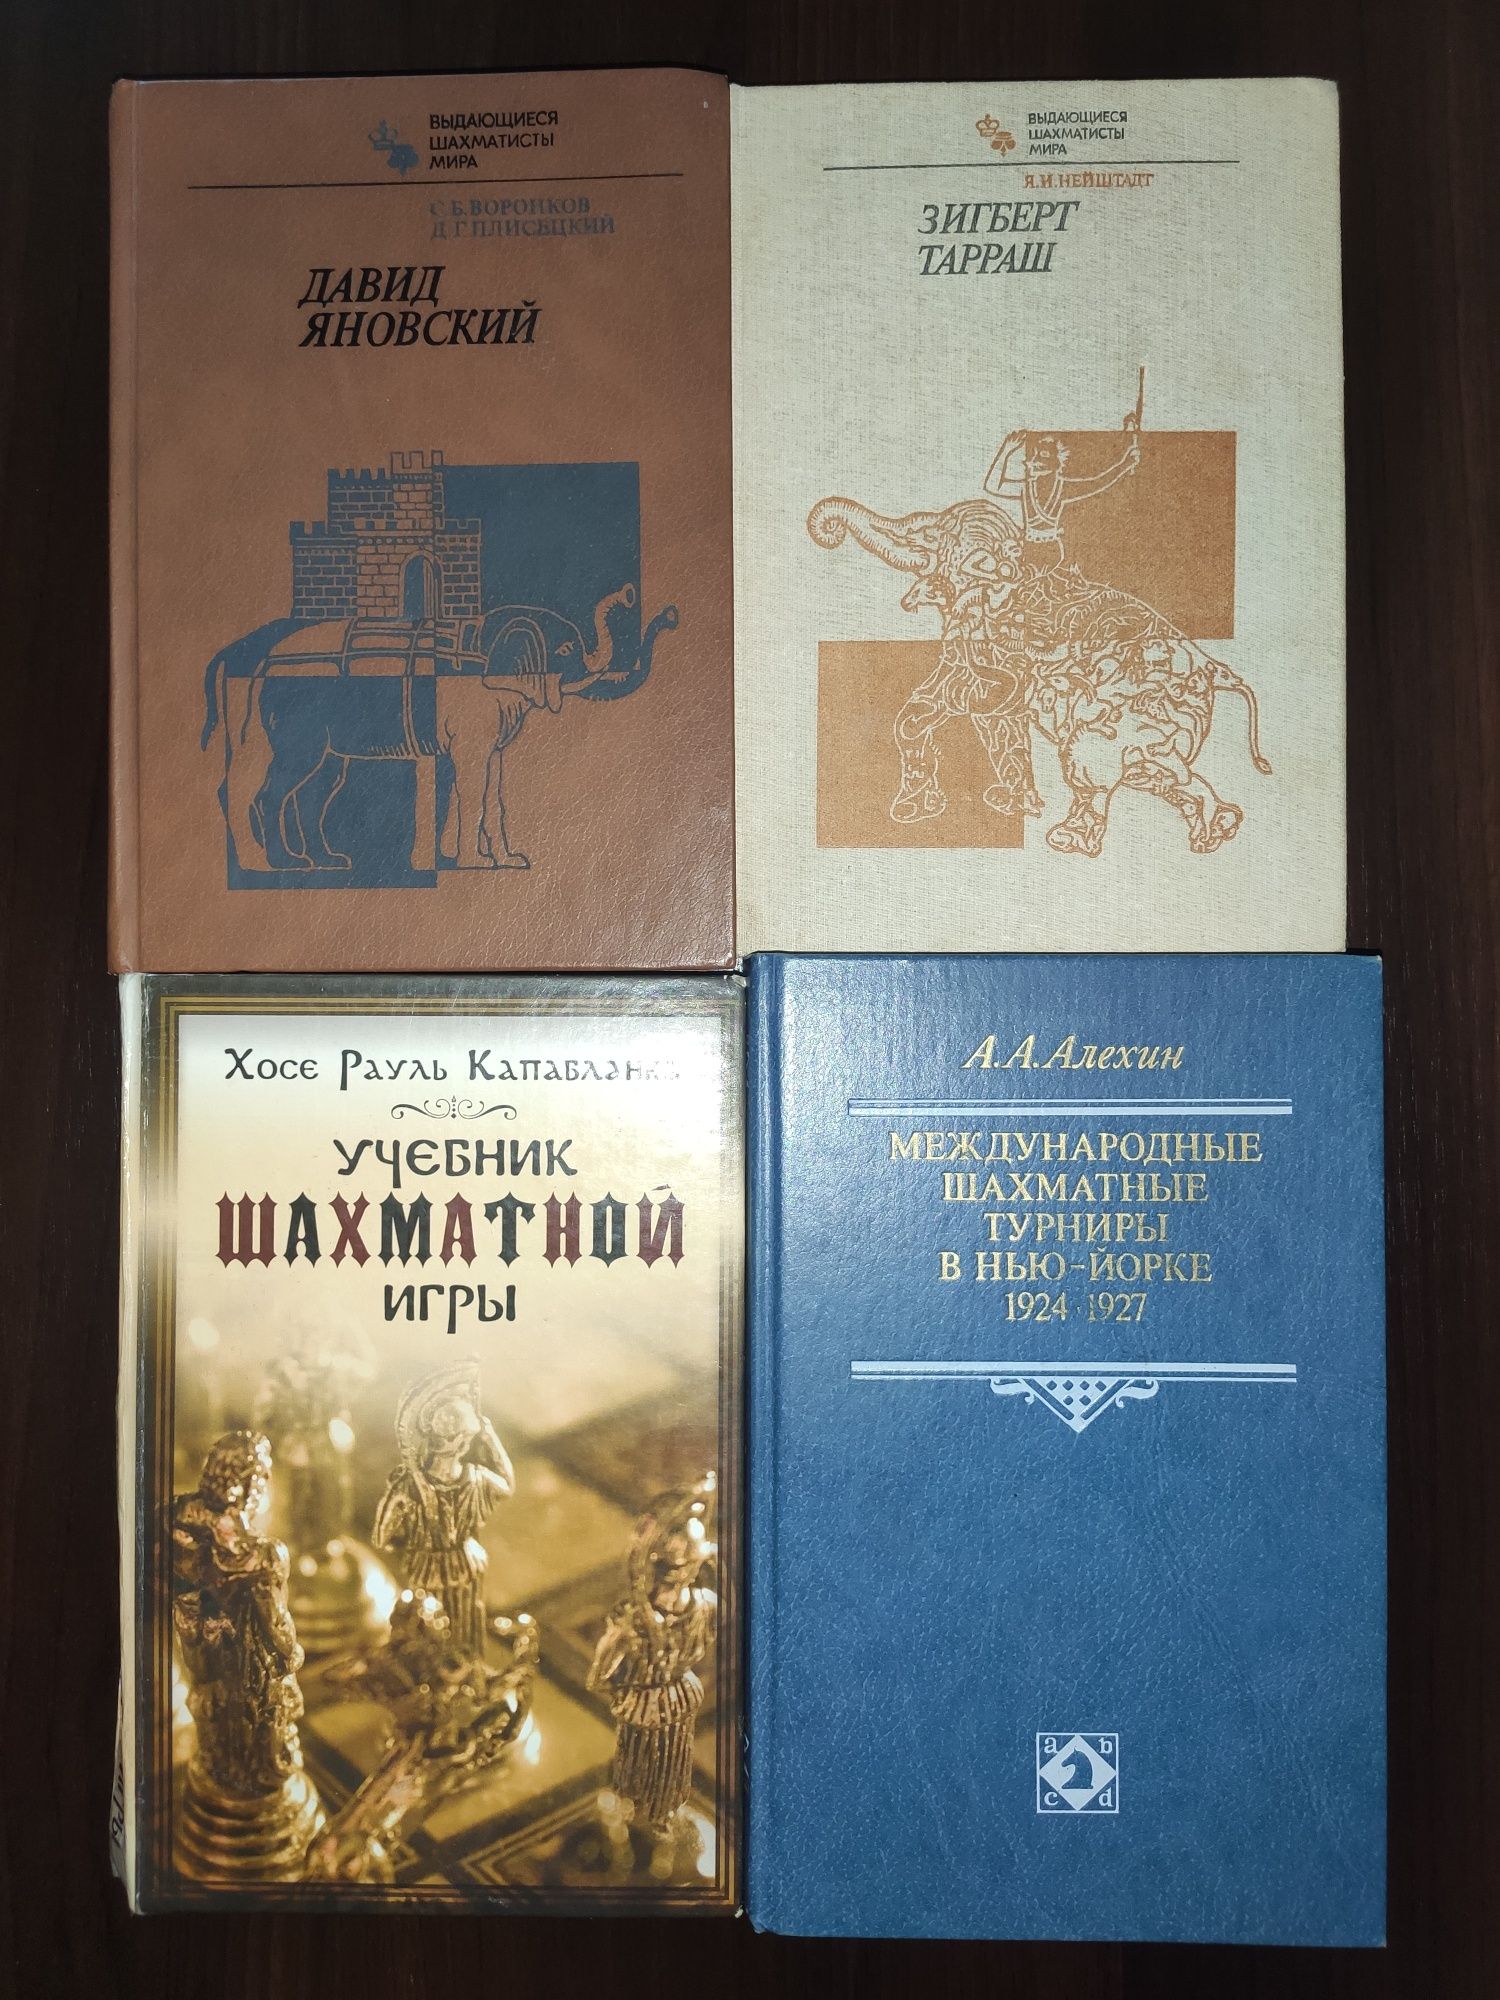 Книги разных лет: Джек Лондон, Стивен Кинг, Агата Кристи, М. Булгаков